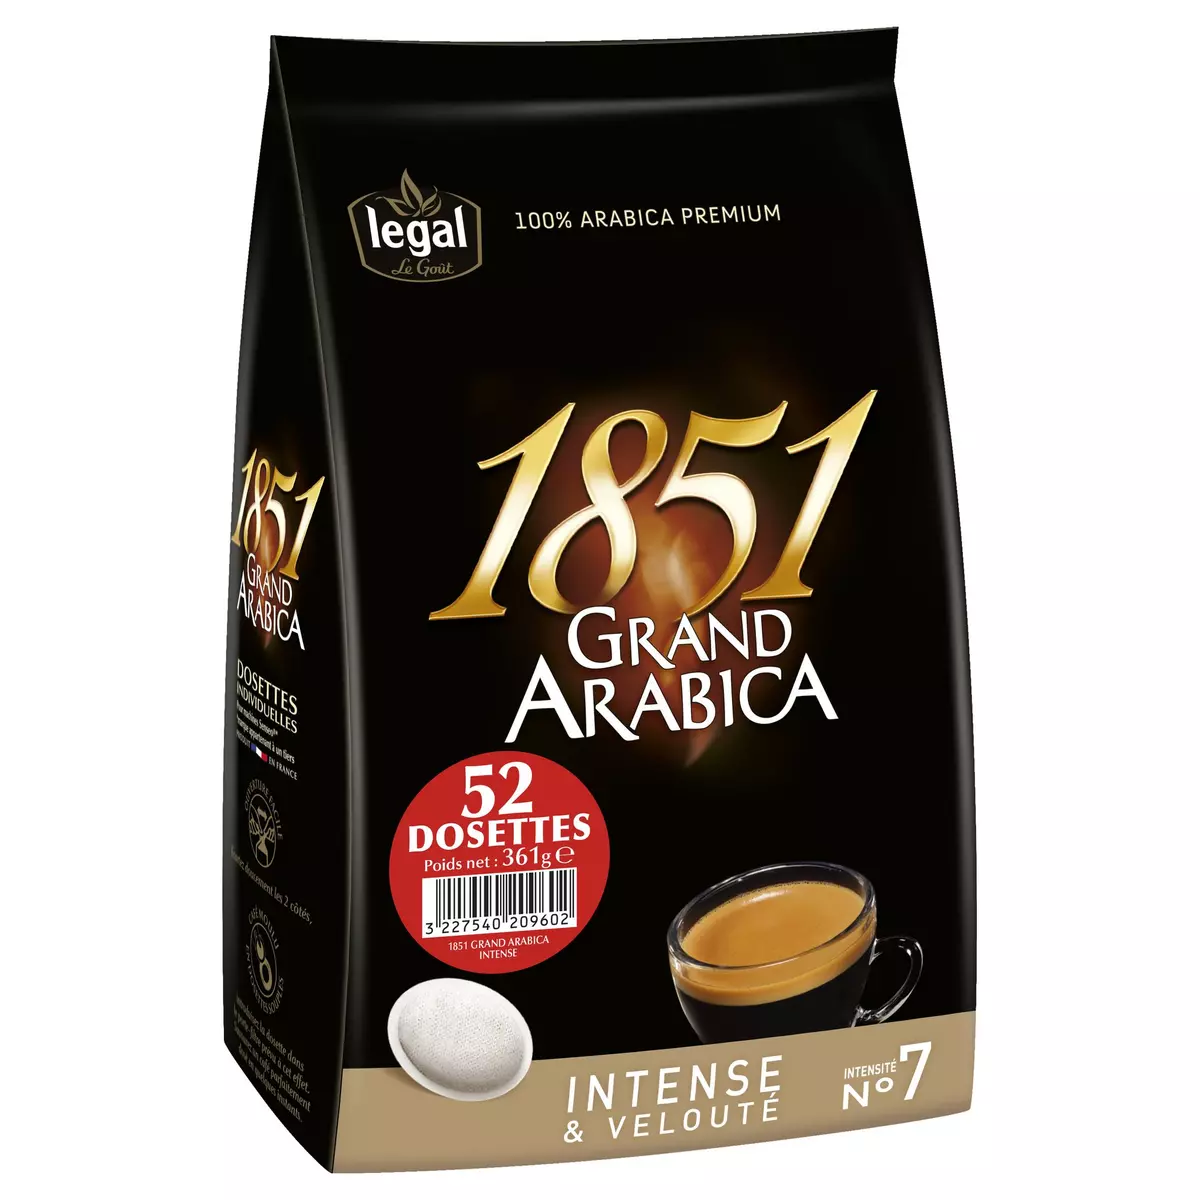 LEGAL Dosettes de café 1851 grand arabica compatibles Senseo 52 dosettes 361g